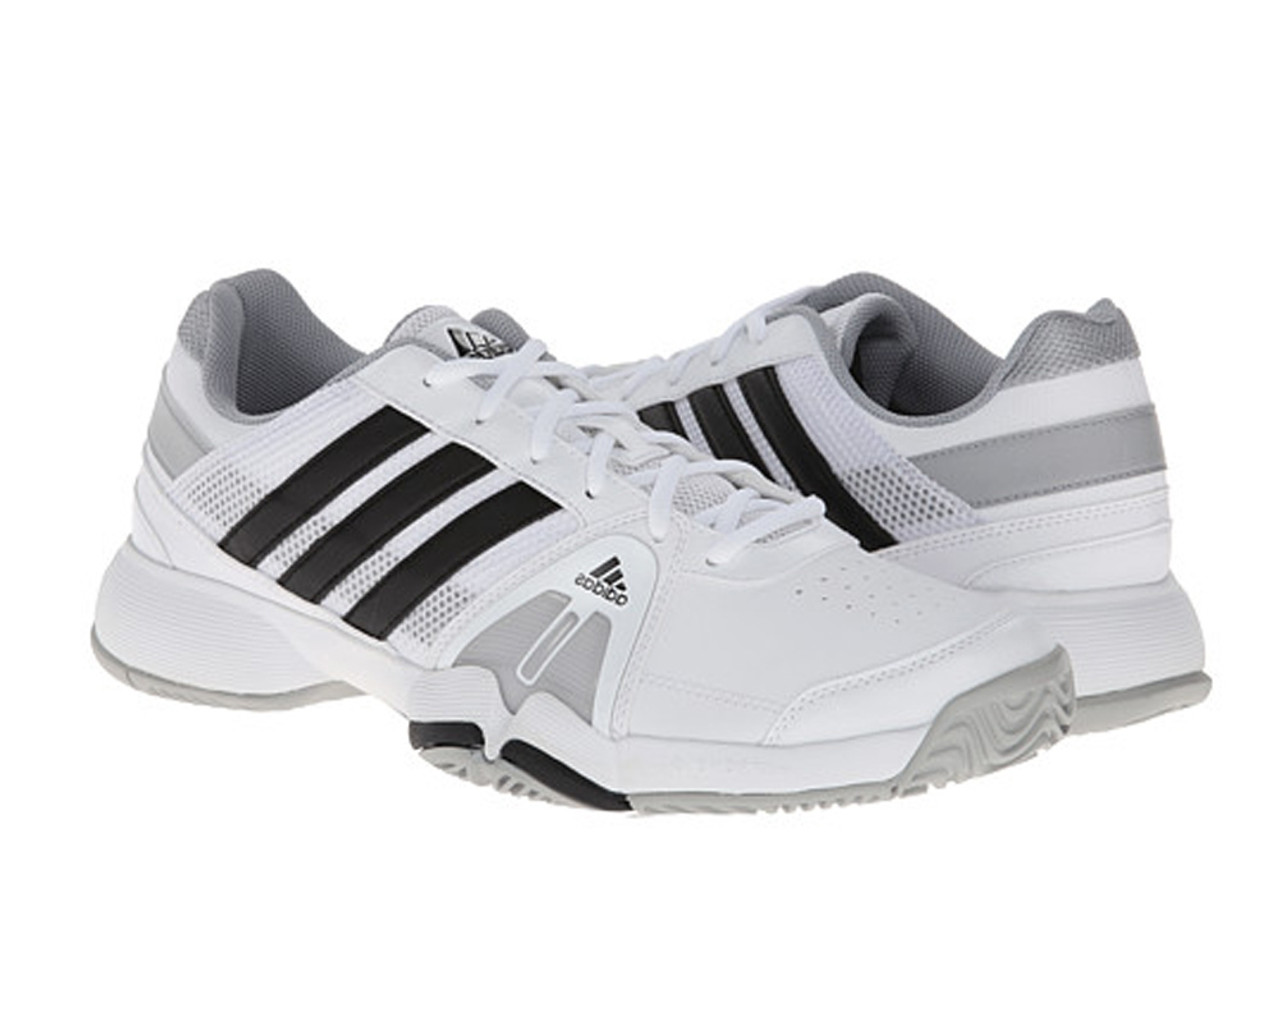 Adidas Barricade 12 Men's Tennis Shoe Royal/white